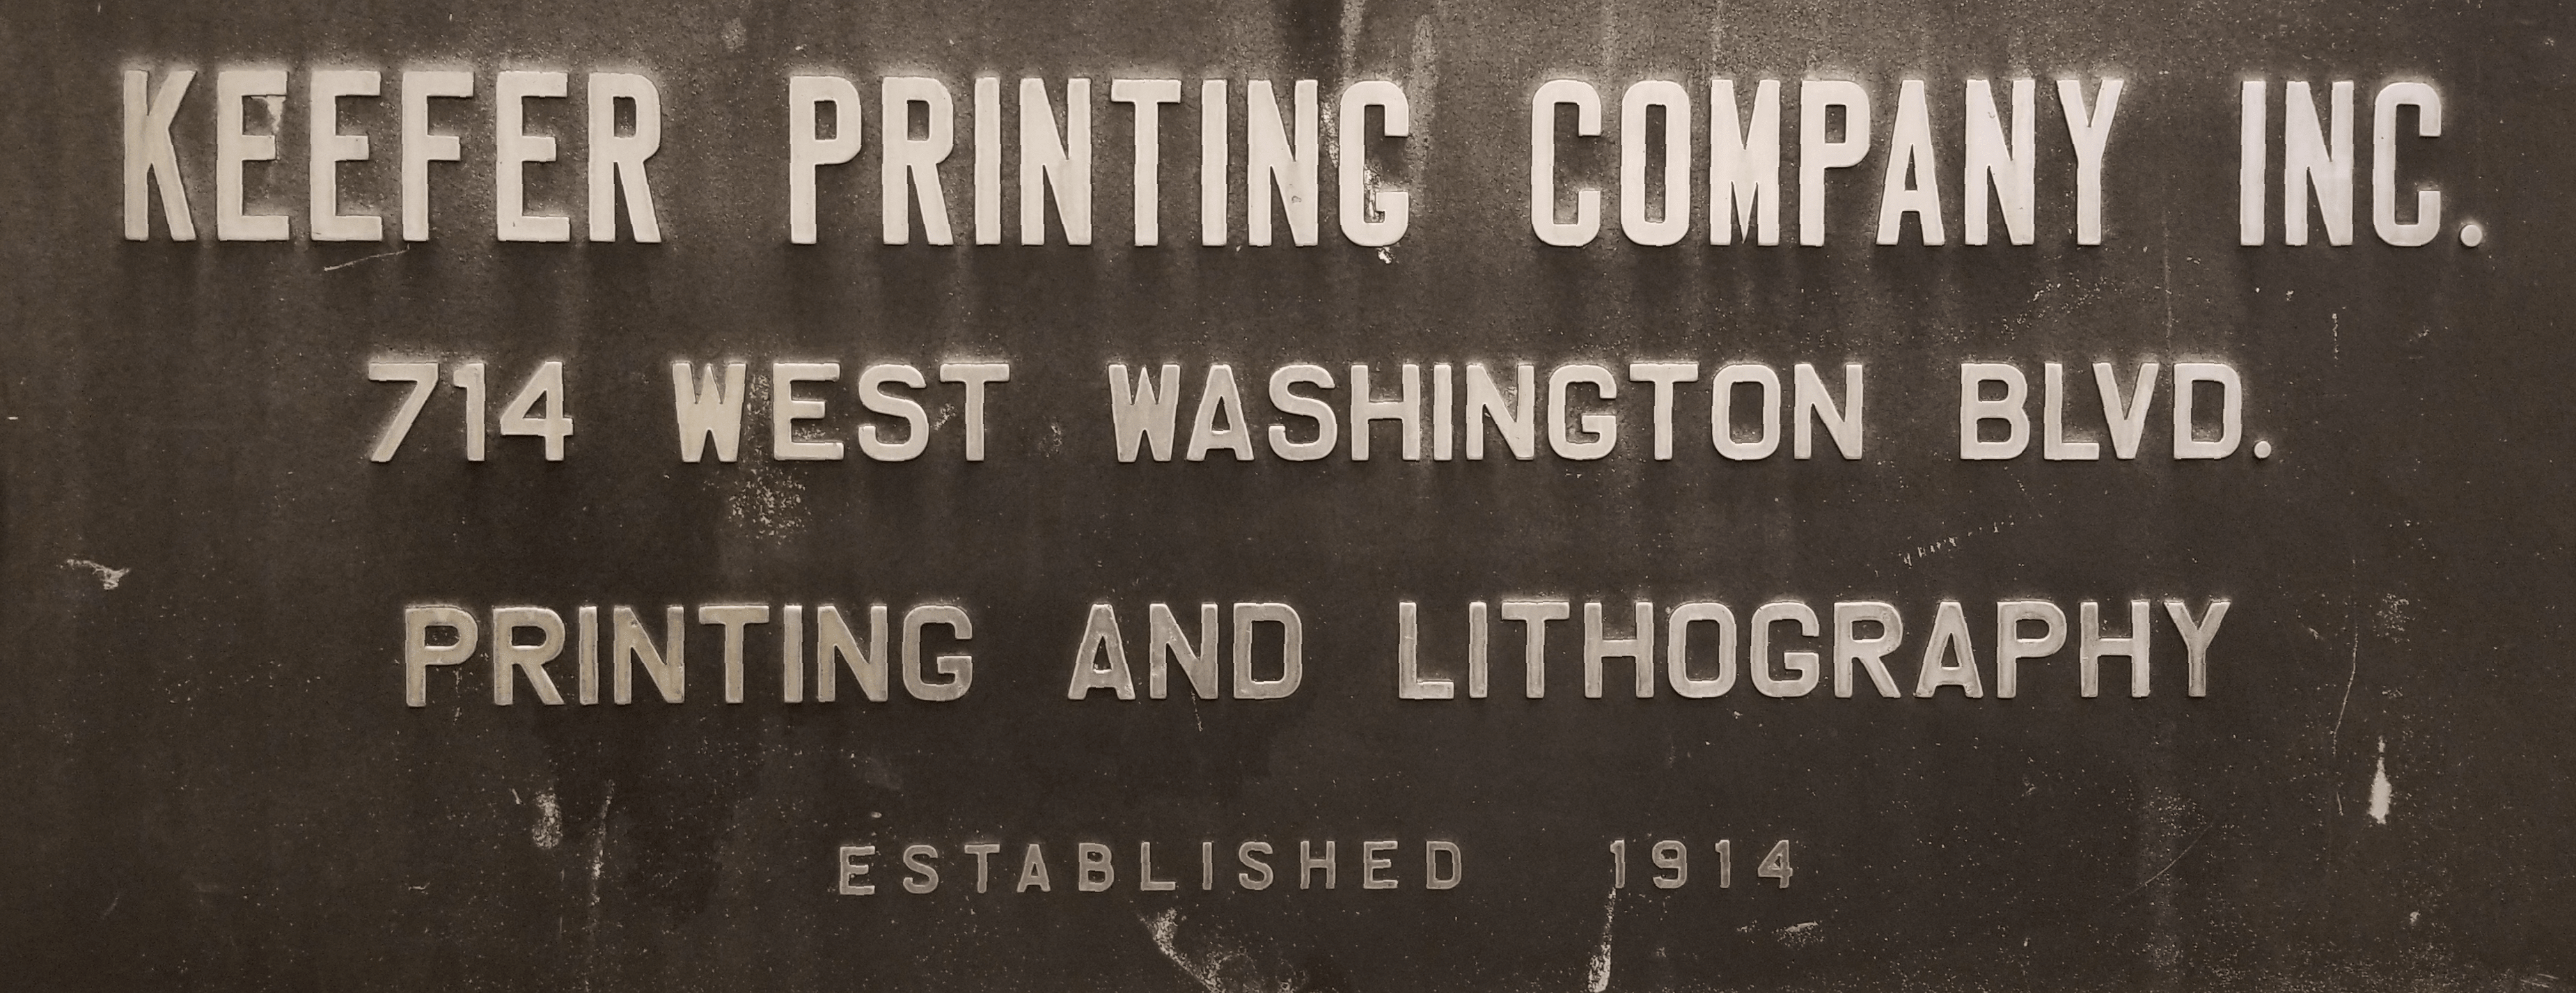 Original Keefer Printing Company Sign